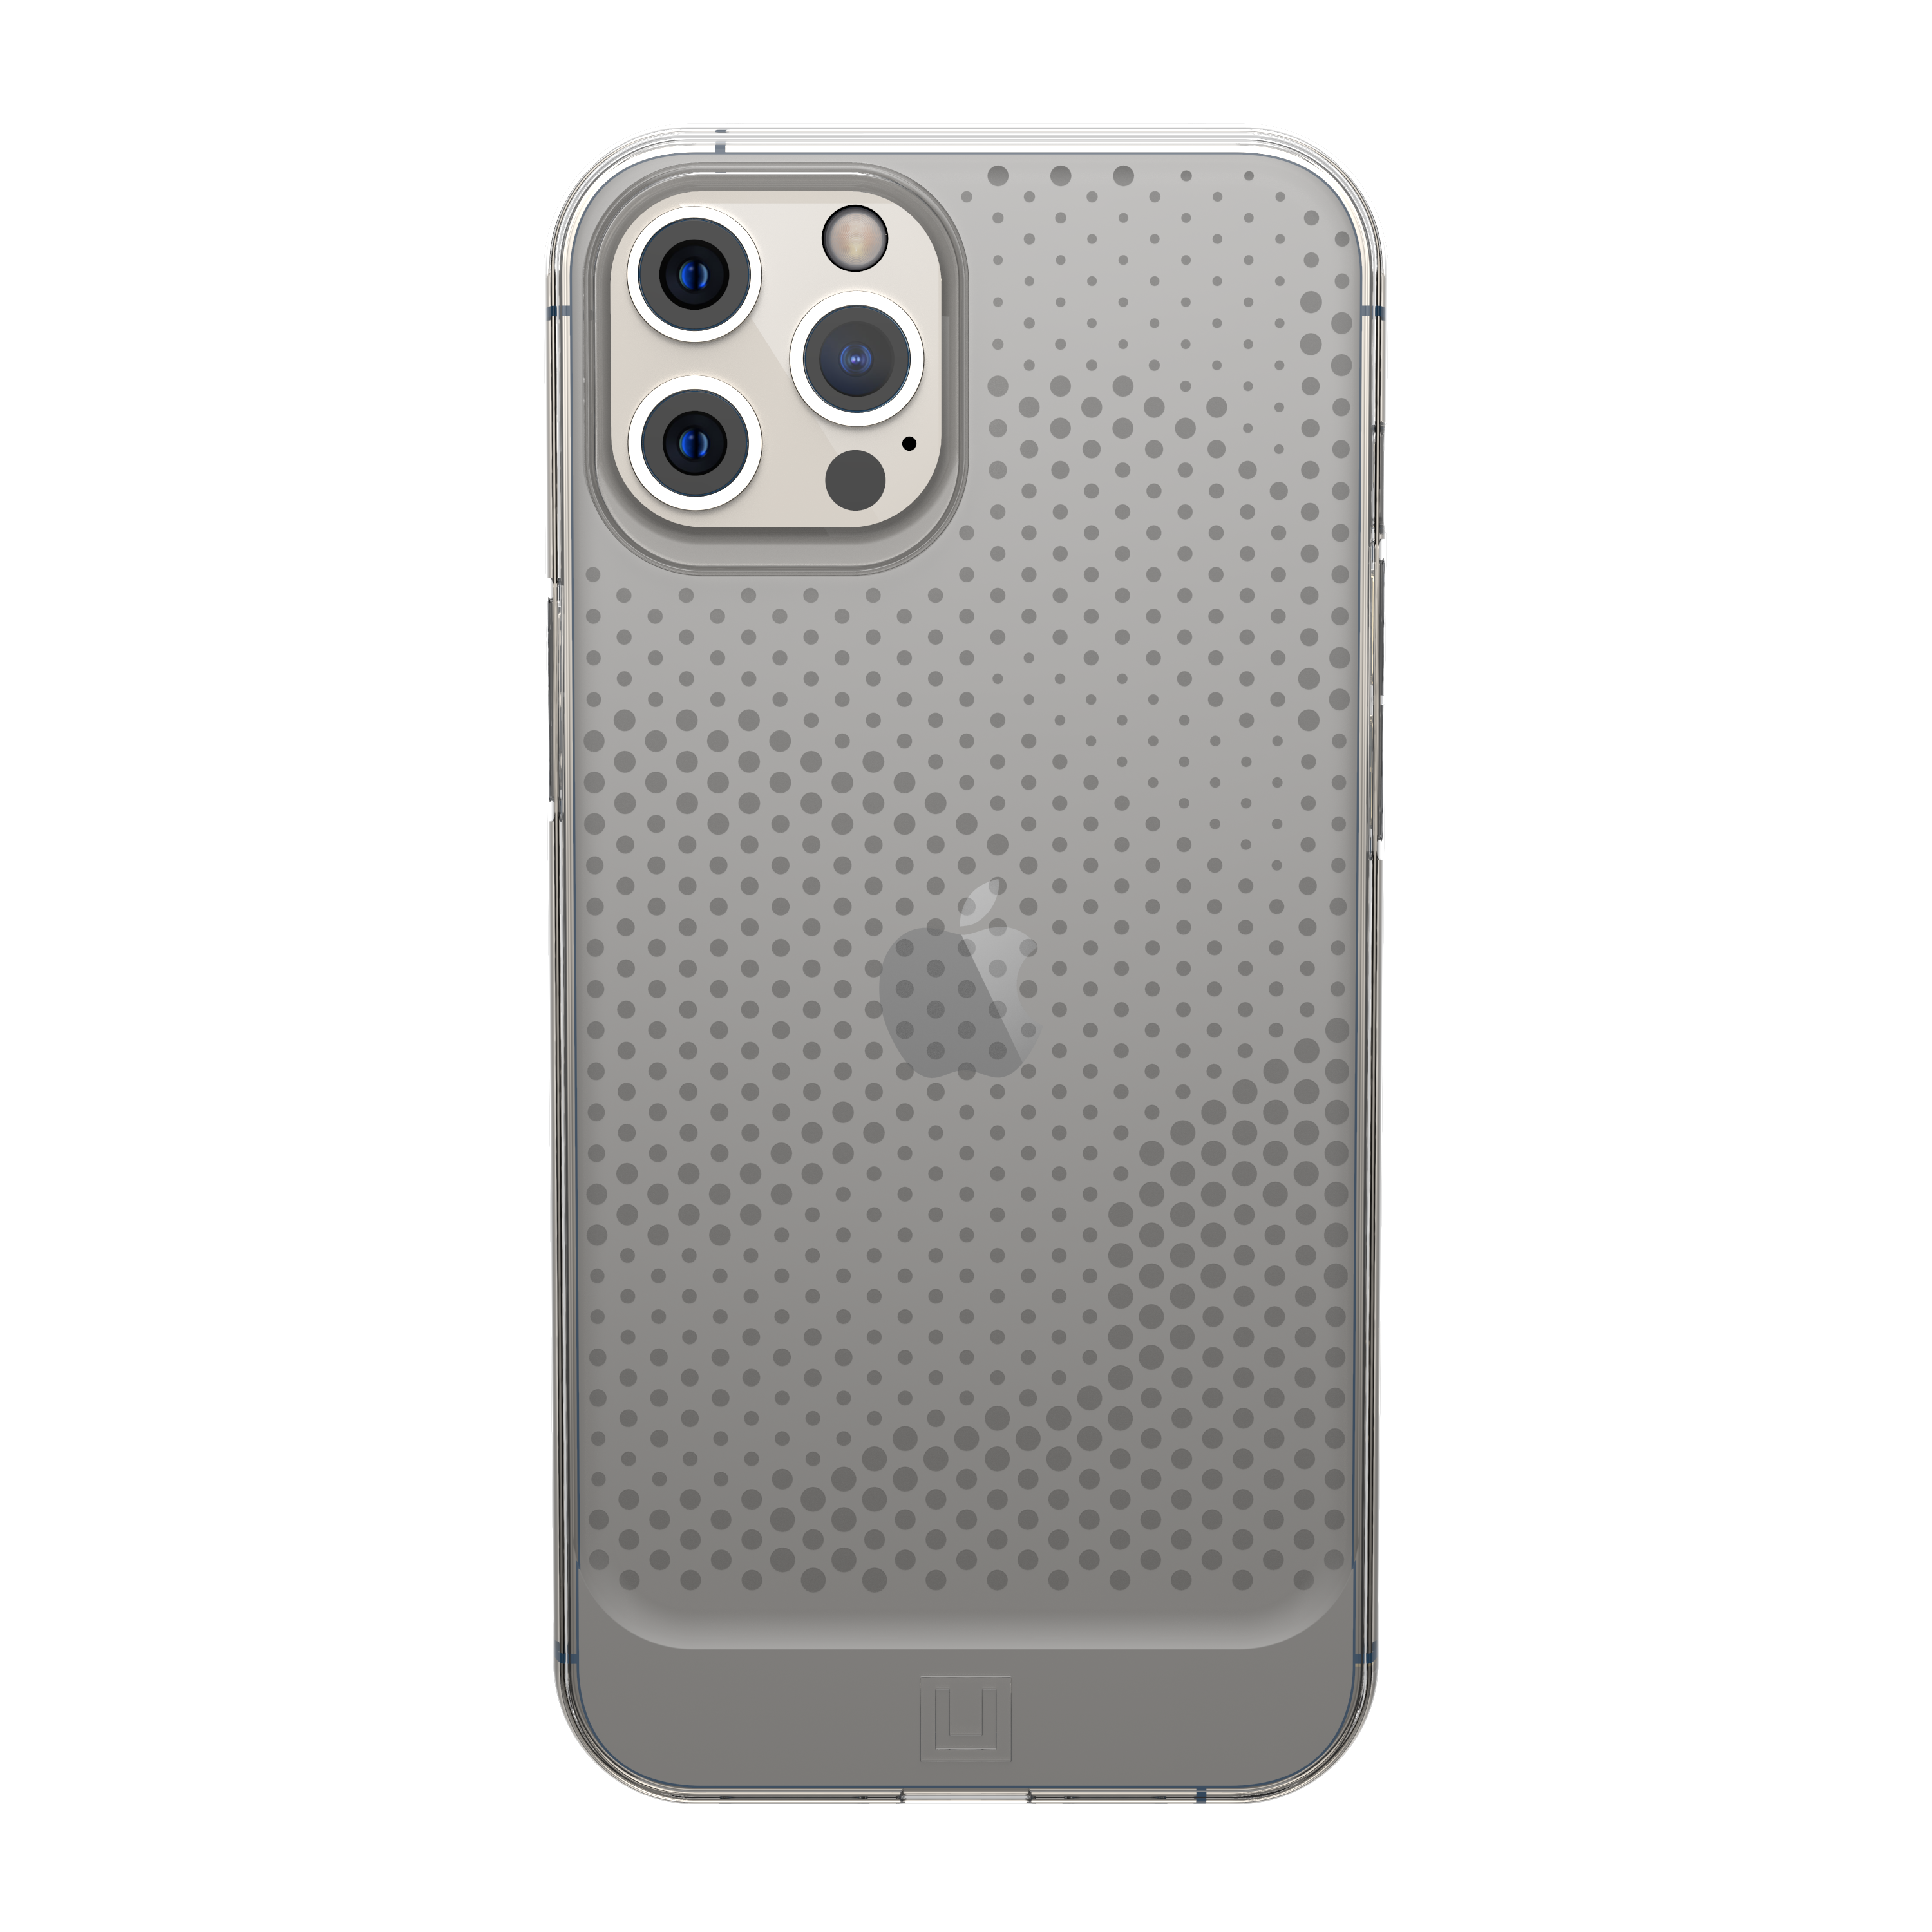 UNIVERSITY OF LOUISVILLE iPhone 12 Pro Max Case